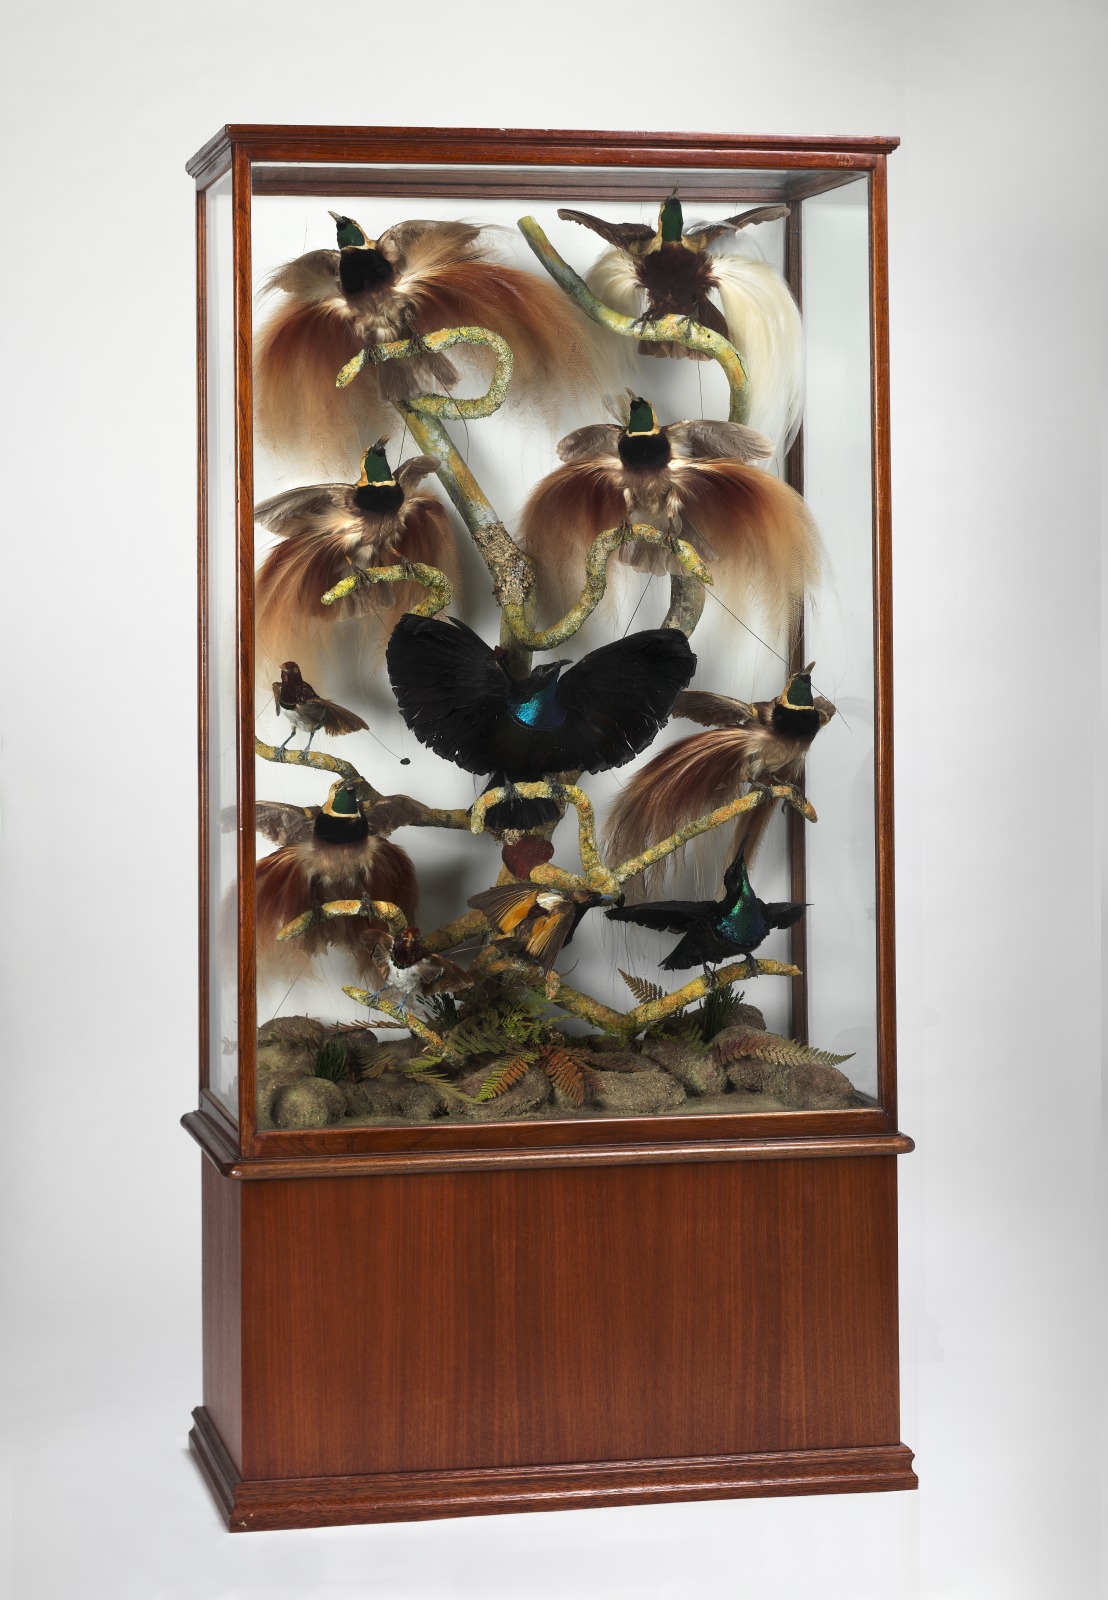 Birds of paradise. Photo: Dean McNicoll, National Museum of Australia.